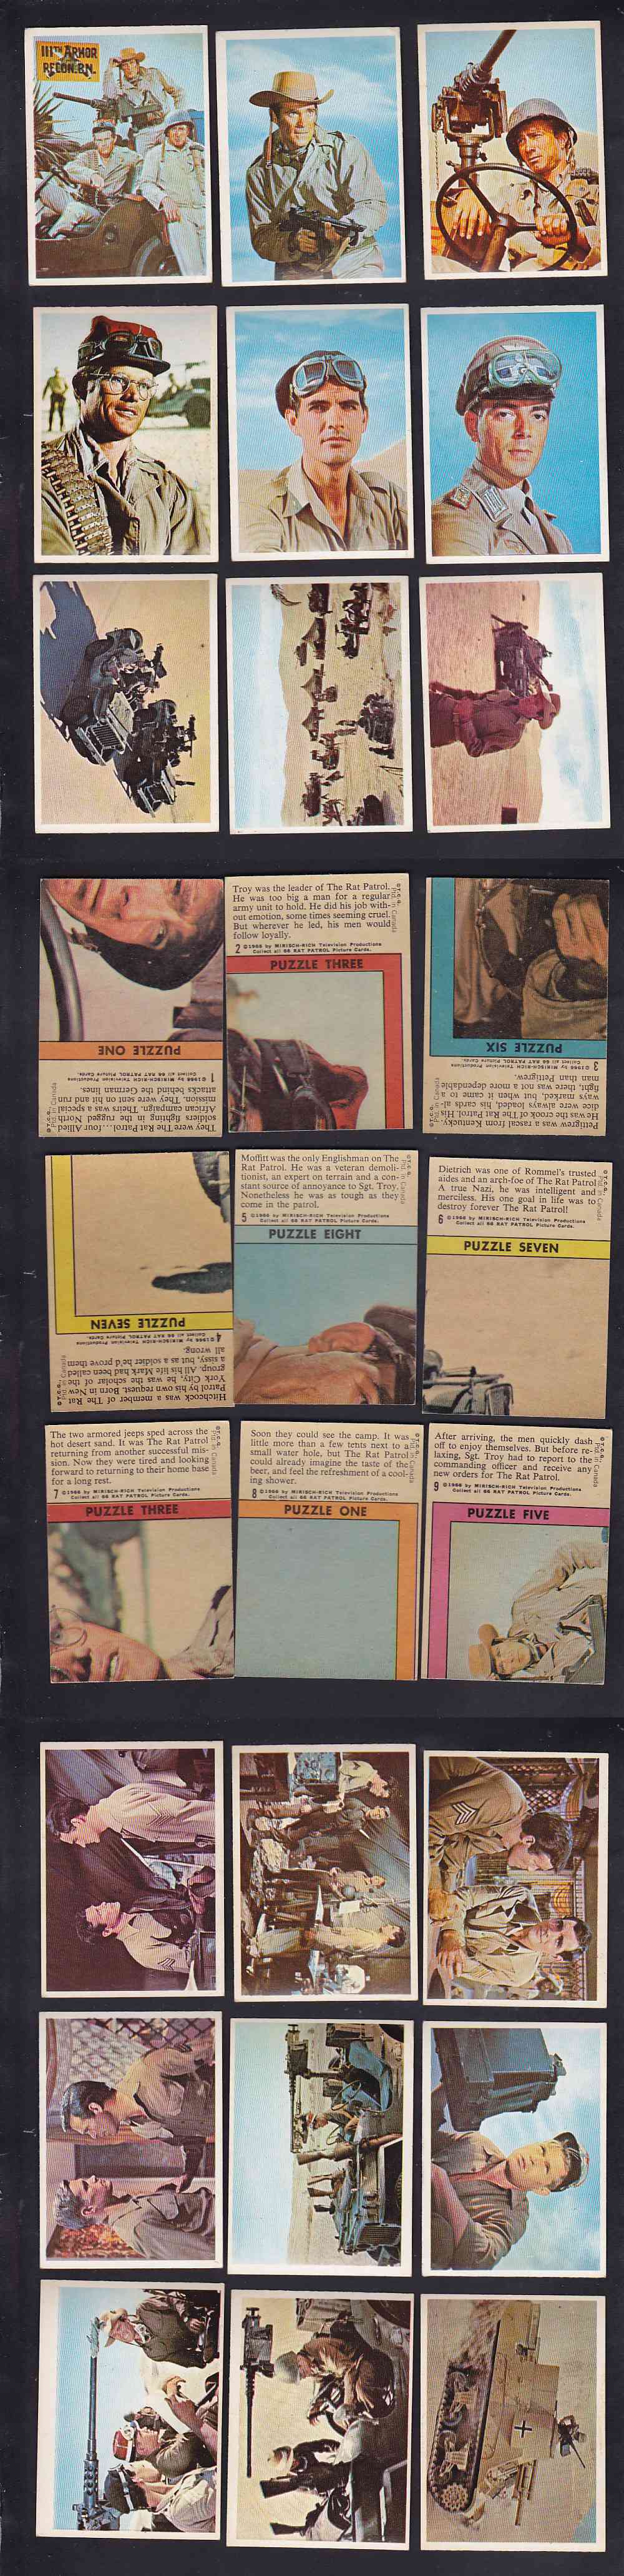 1966 TOPPS RAT PATROL CARD FULL SET 66/66 photo